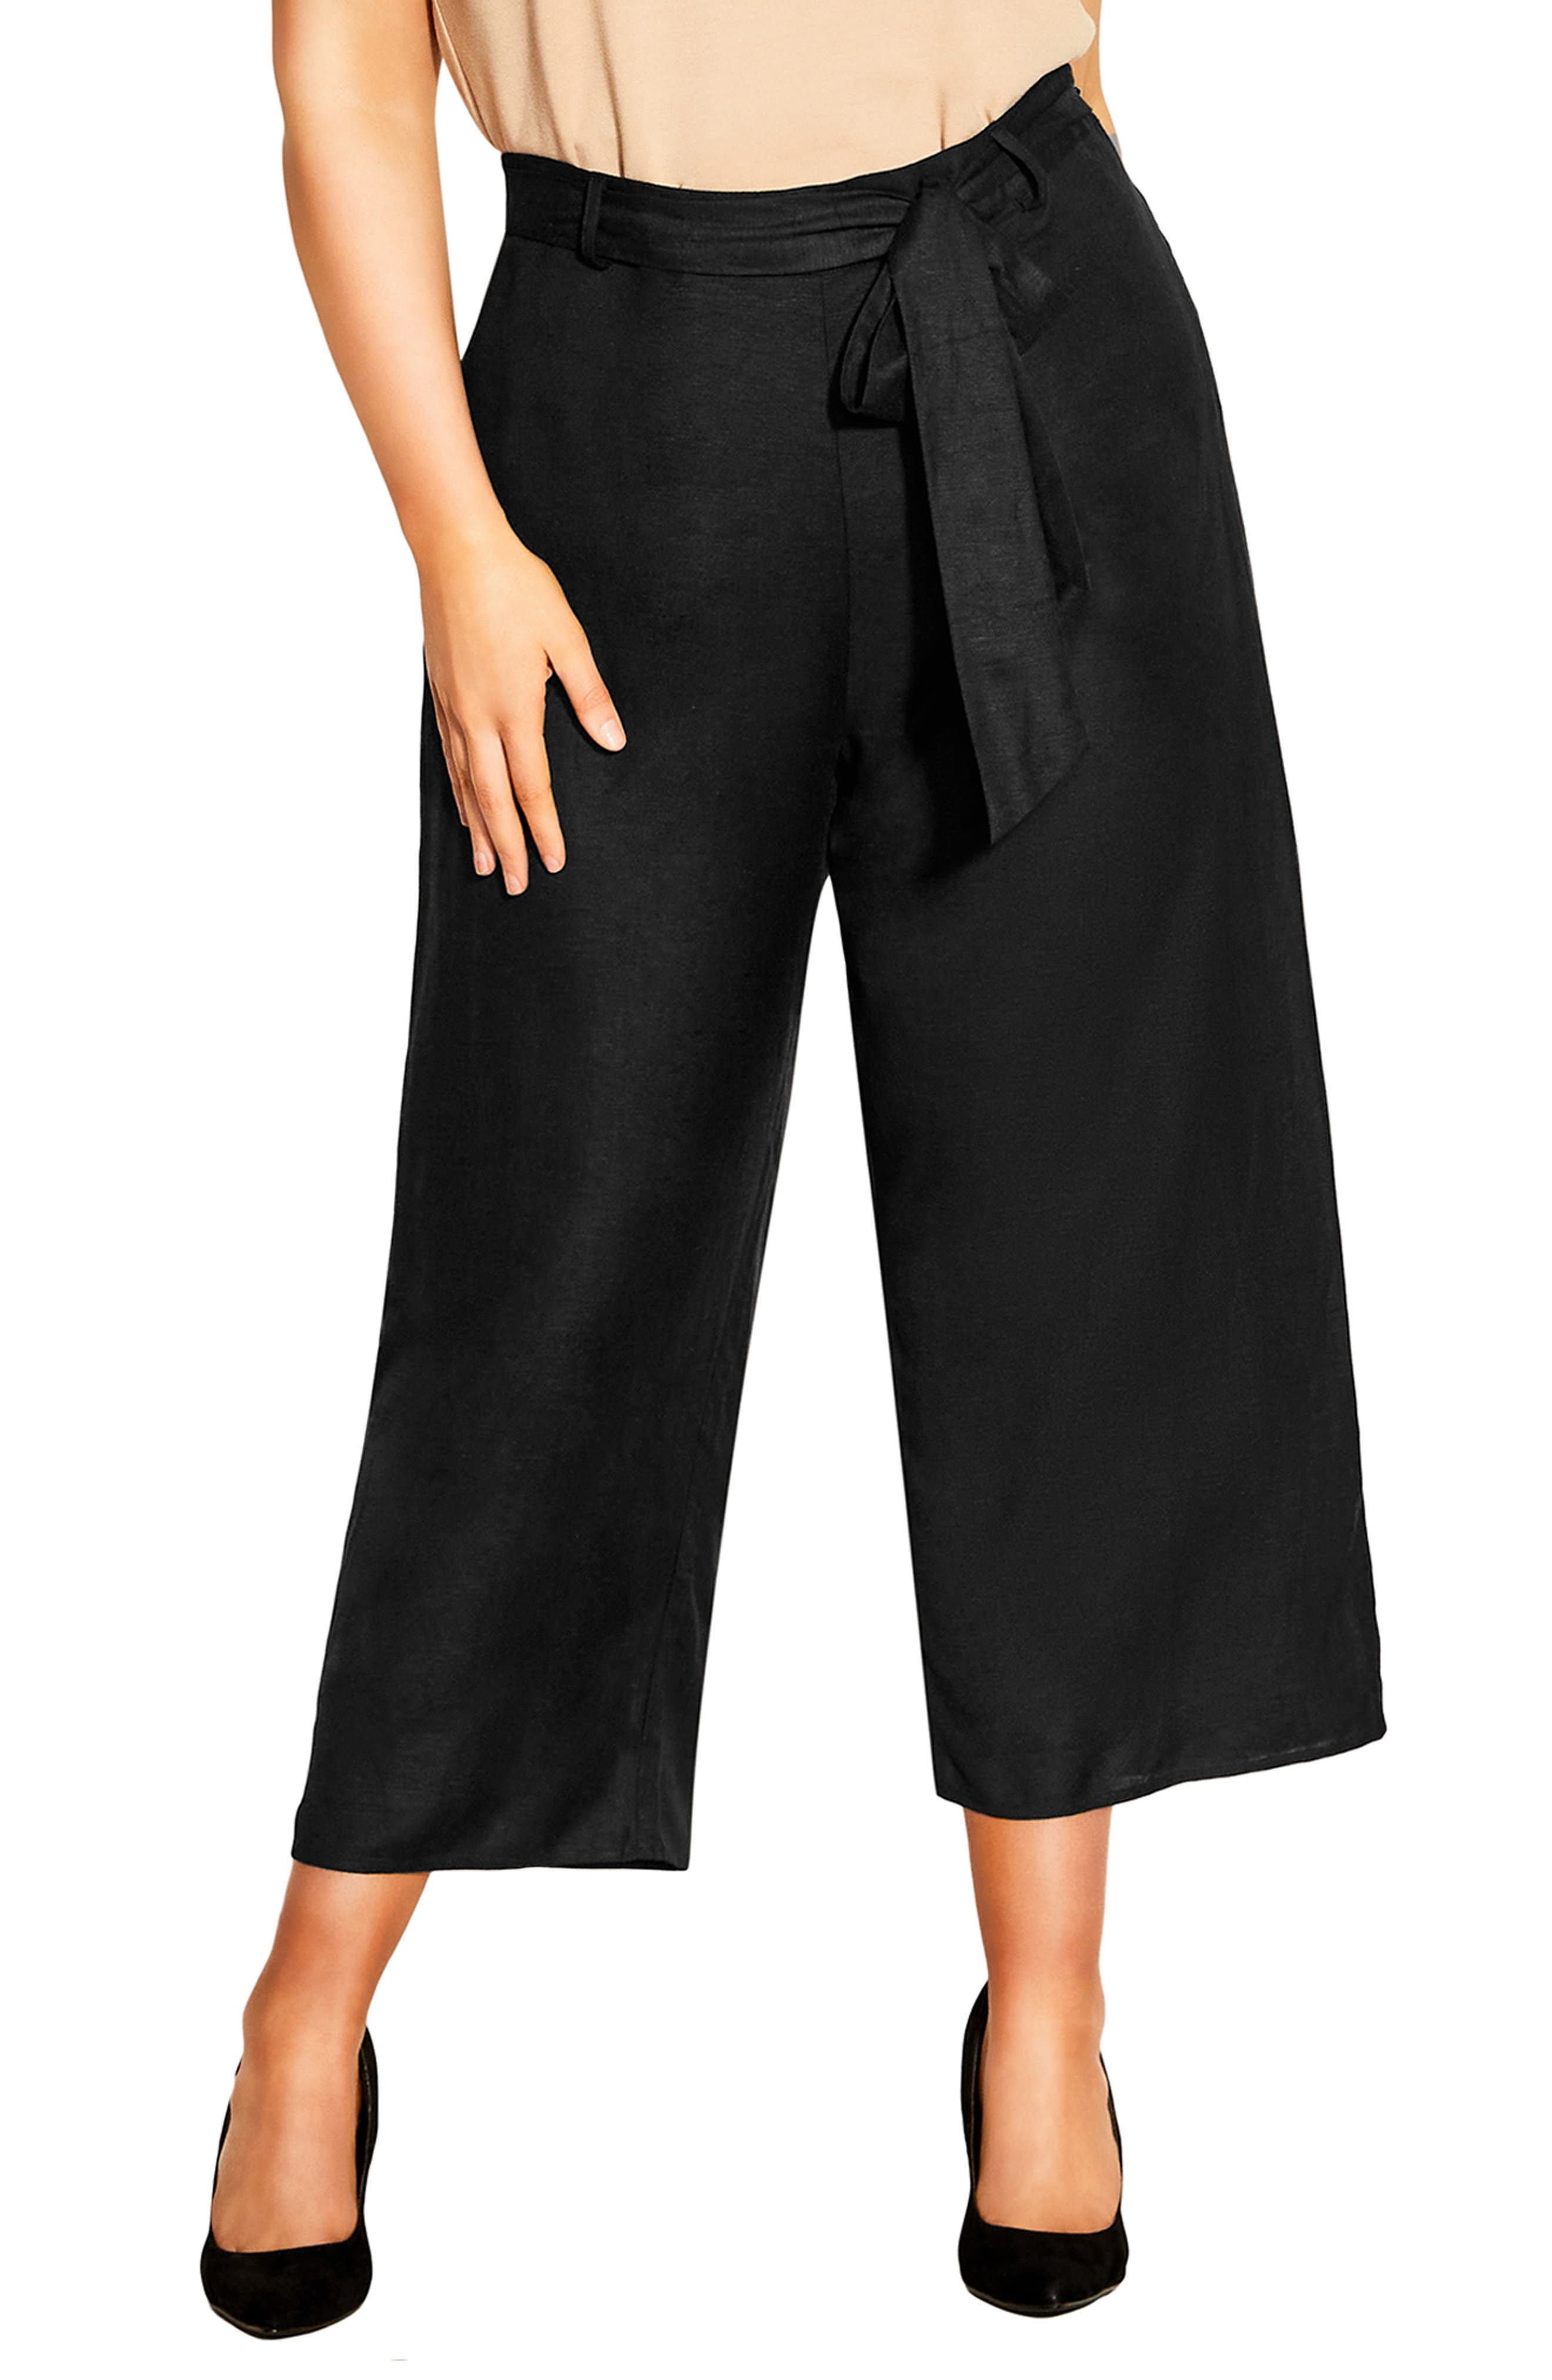 TOPSHOP Black Petite Satin Back Crepe Culottes Trousers Shorts Size 4 to 14